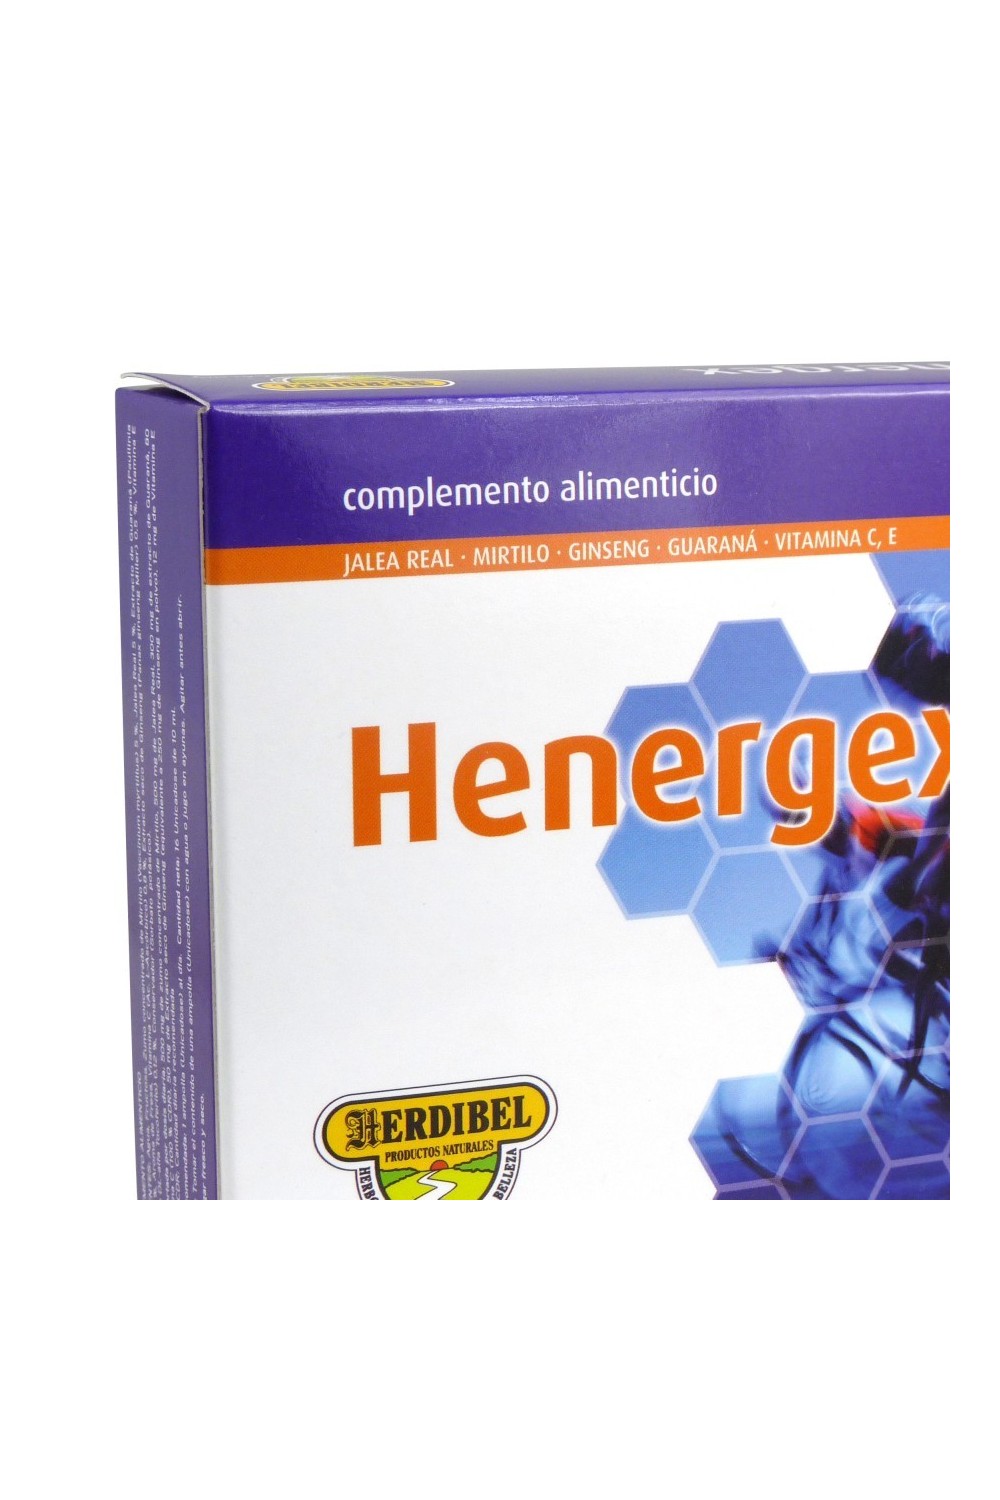 Herdibel Henergex 16 Unicadose